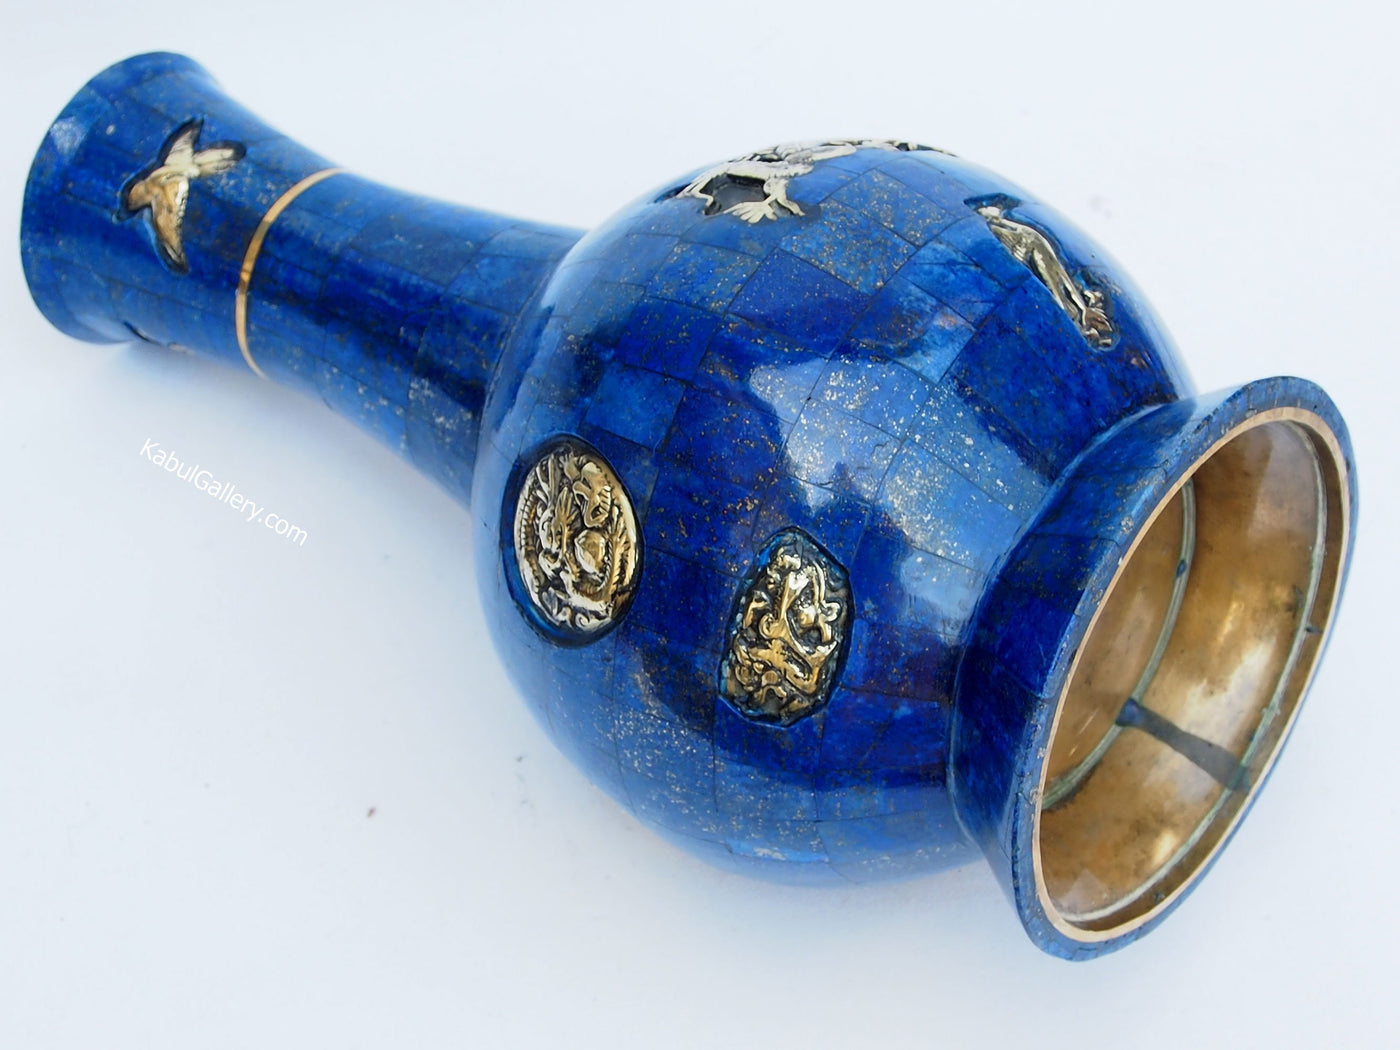 Extravagant Große Royal blau echt Lapis Lazuli - Messing ormolu montiert Vase Prunkvase Krug  aus Afghanistan Nr:18/1  Orientsbazar   